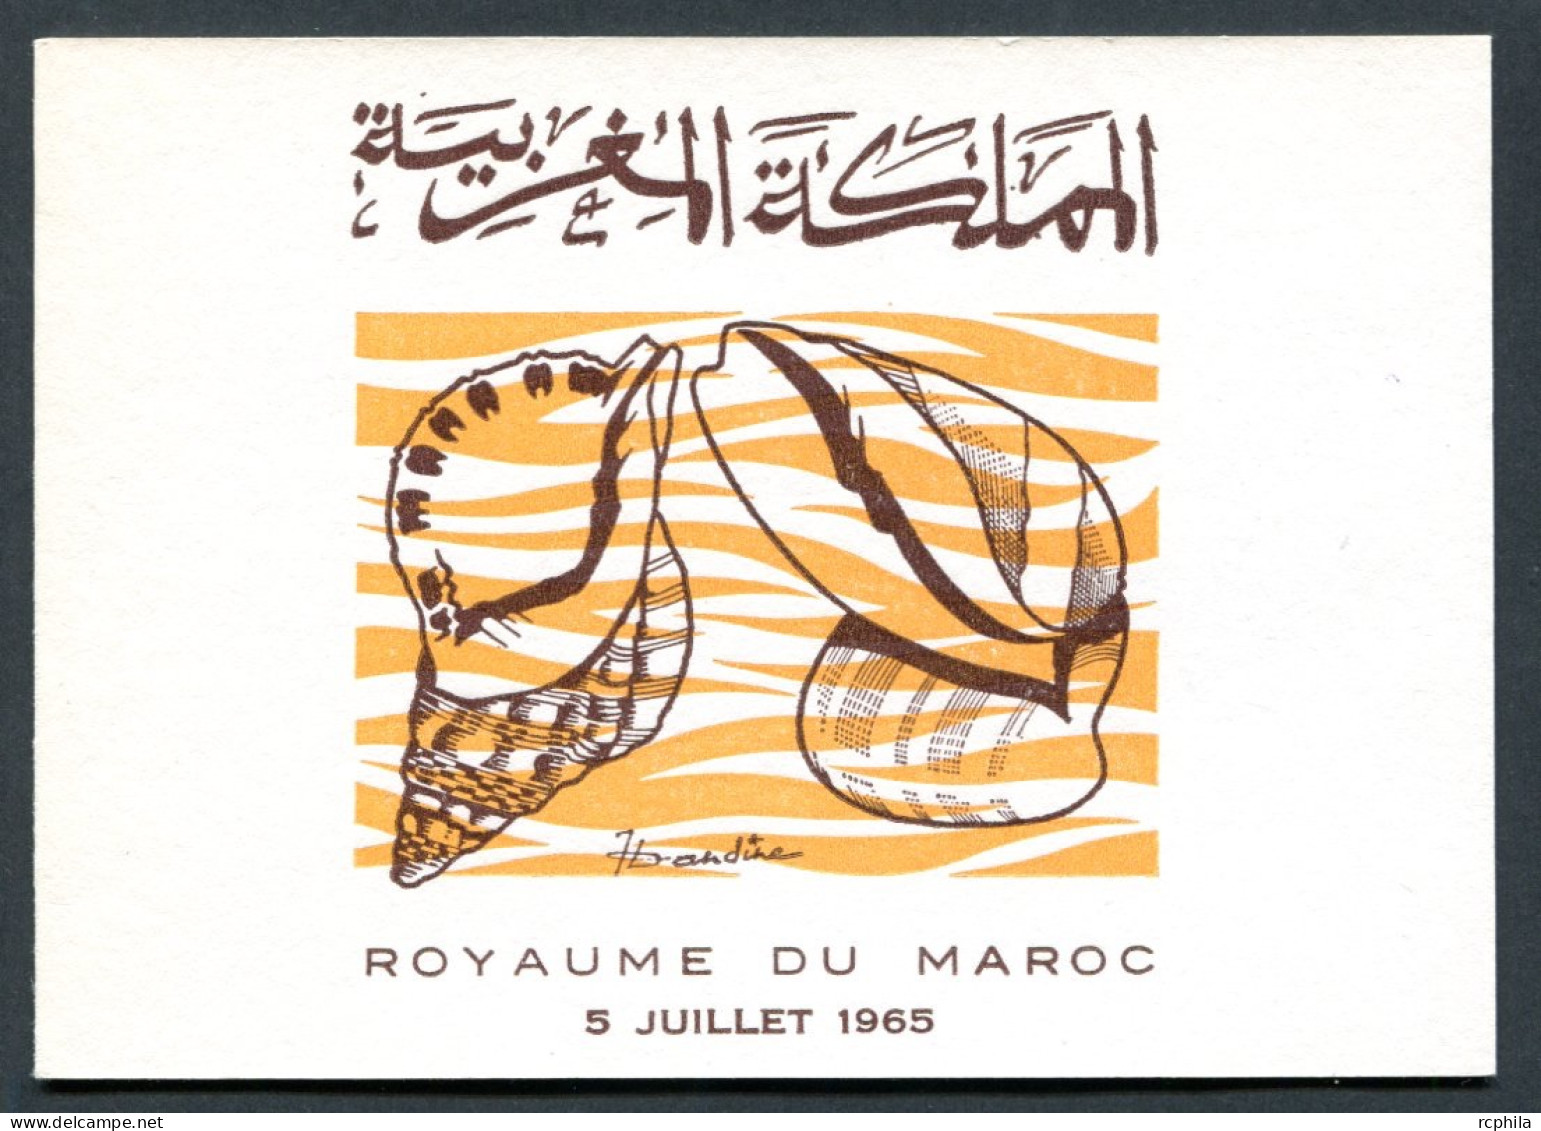 RC 27468 MAROC N° 488 / 490 FAUNE COQUILLAGES ENCART 1er JOUR TIRAGE 200 Ex SIGNÉ JEAN DANDINE - Marruecos (1956-...)